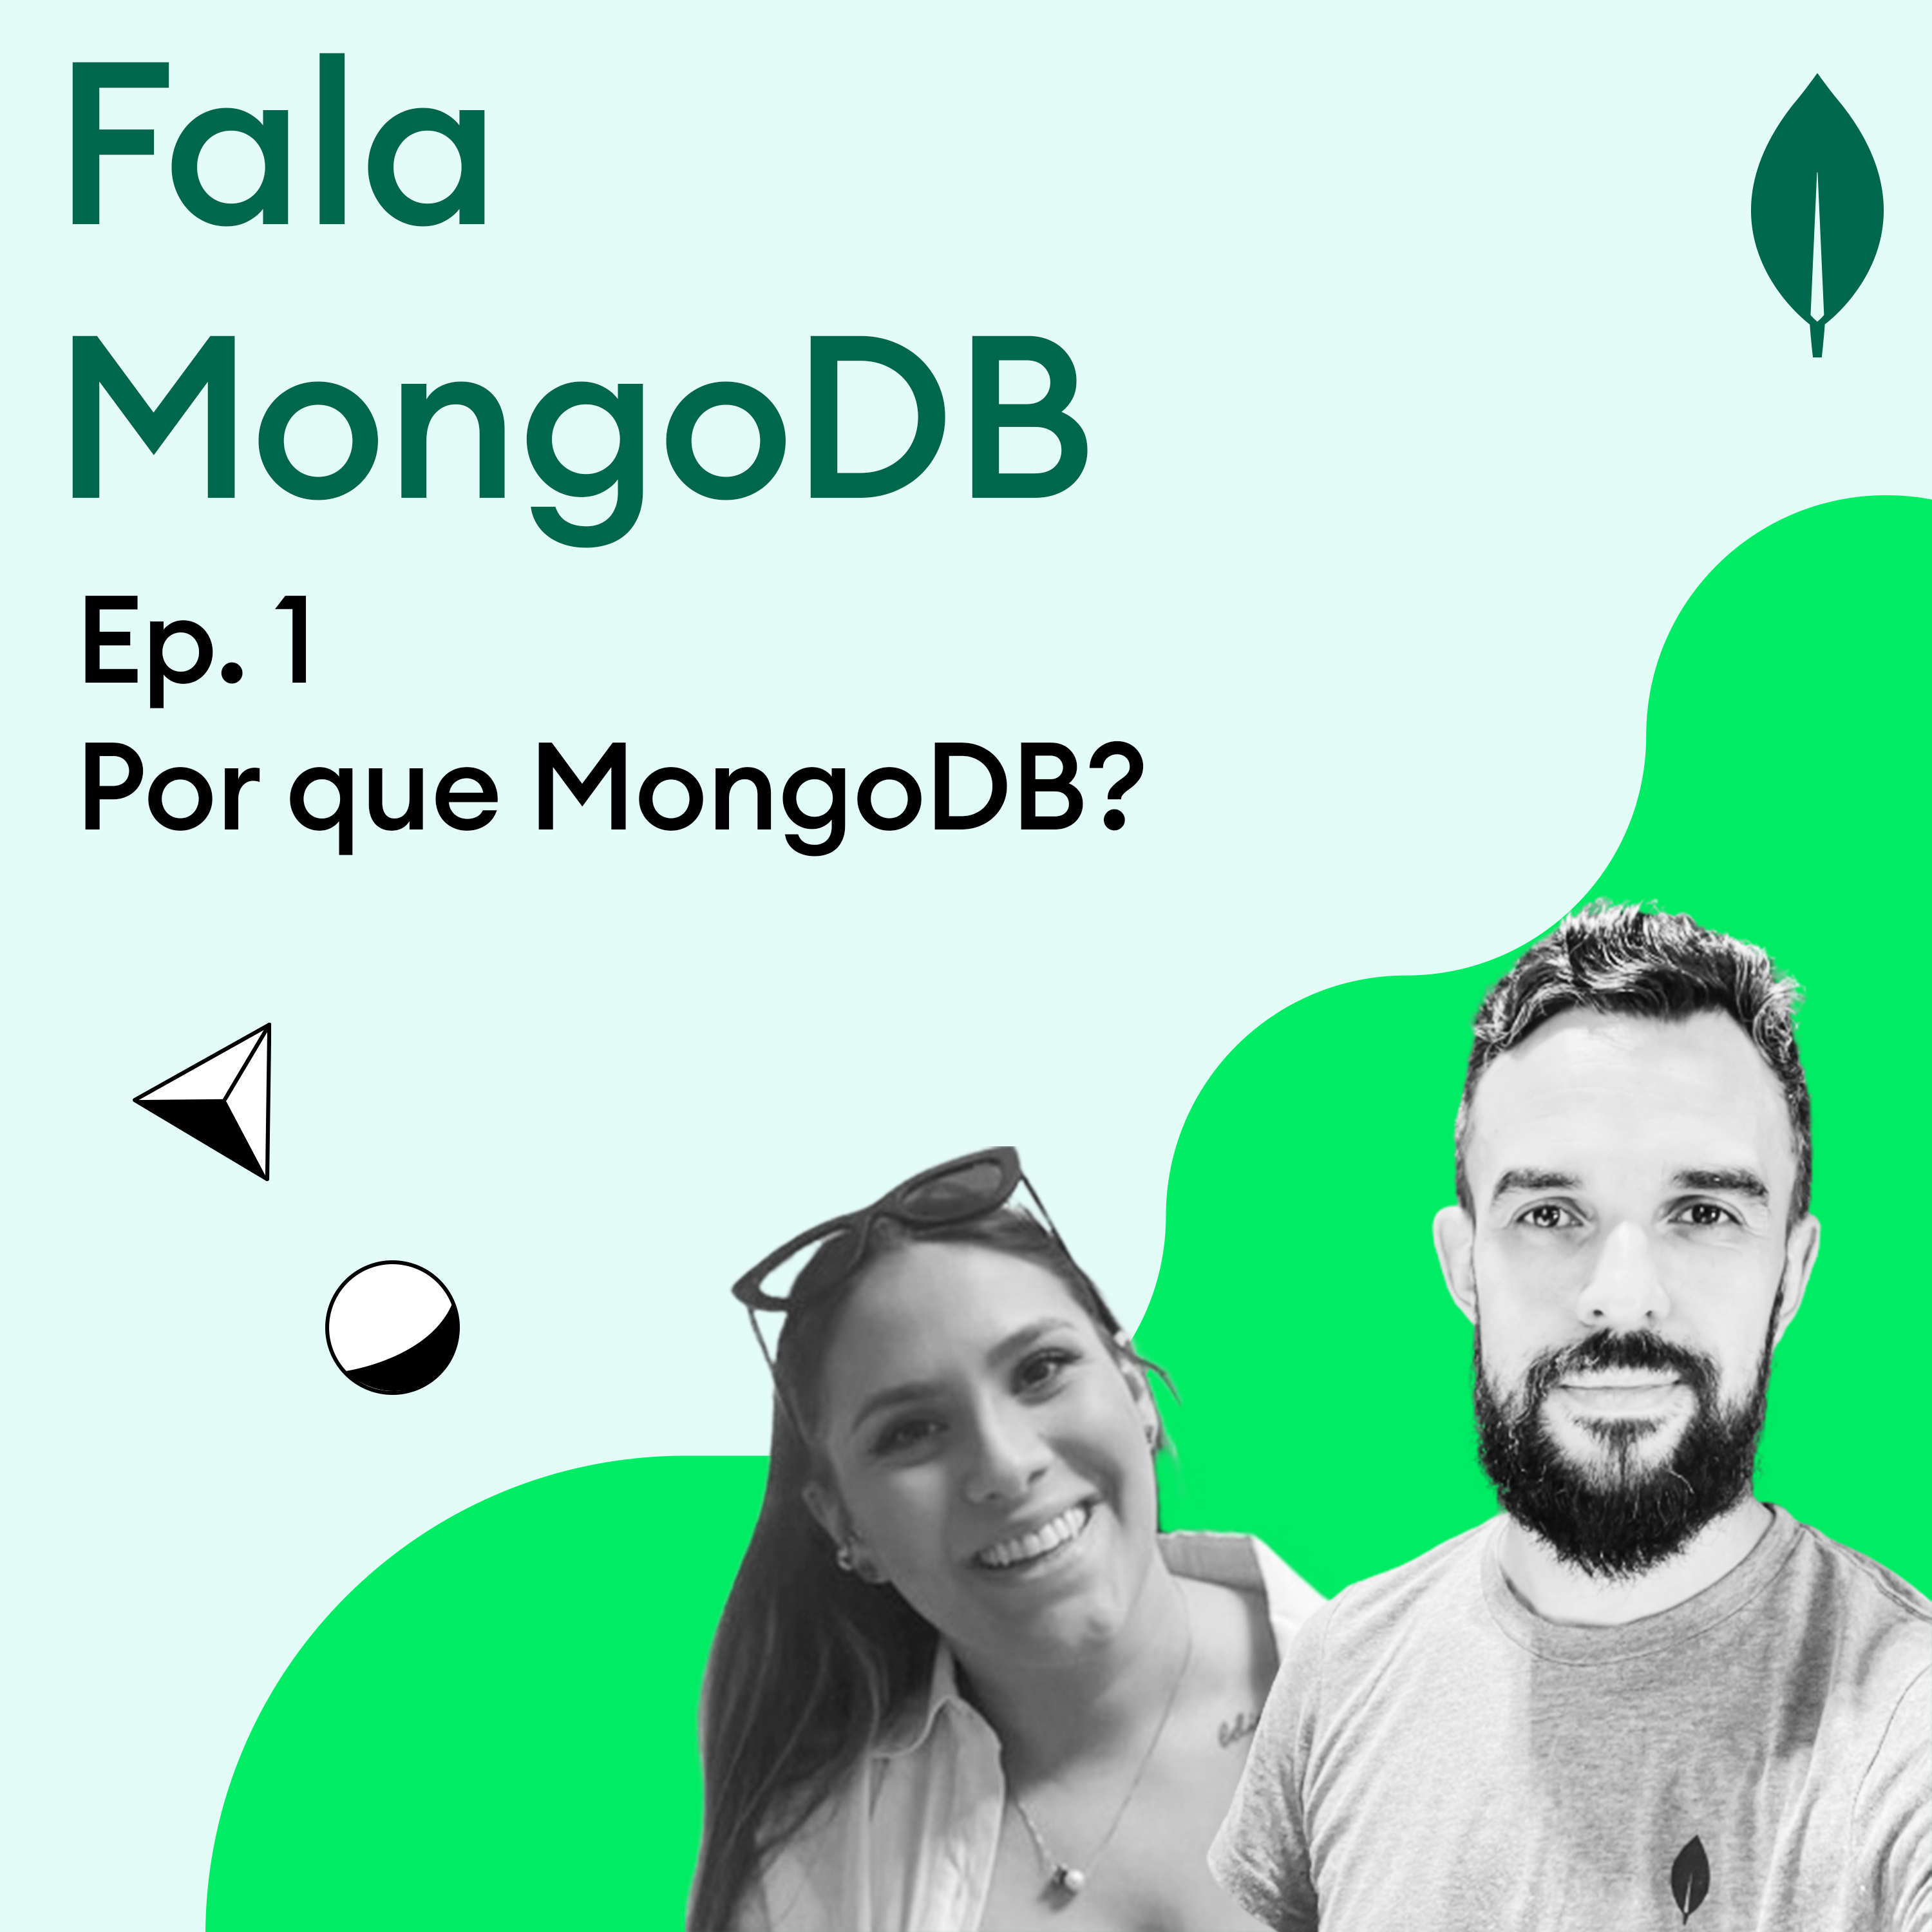 Fala MongoDB Ep. 1 Por que MongoDB?